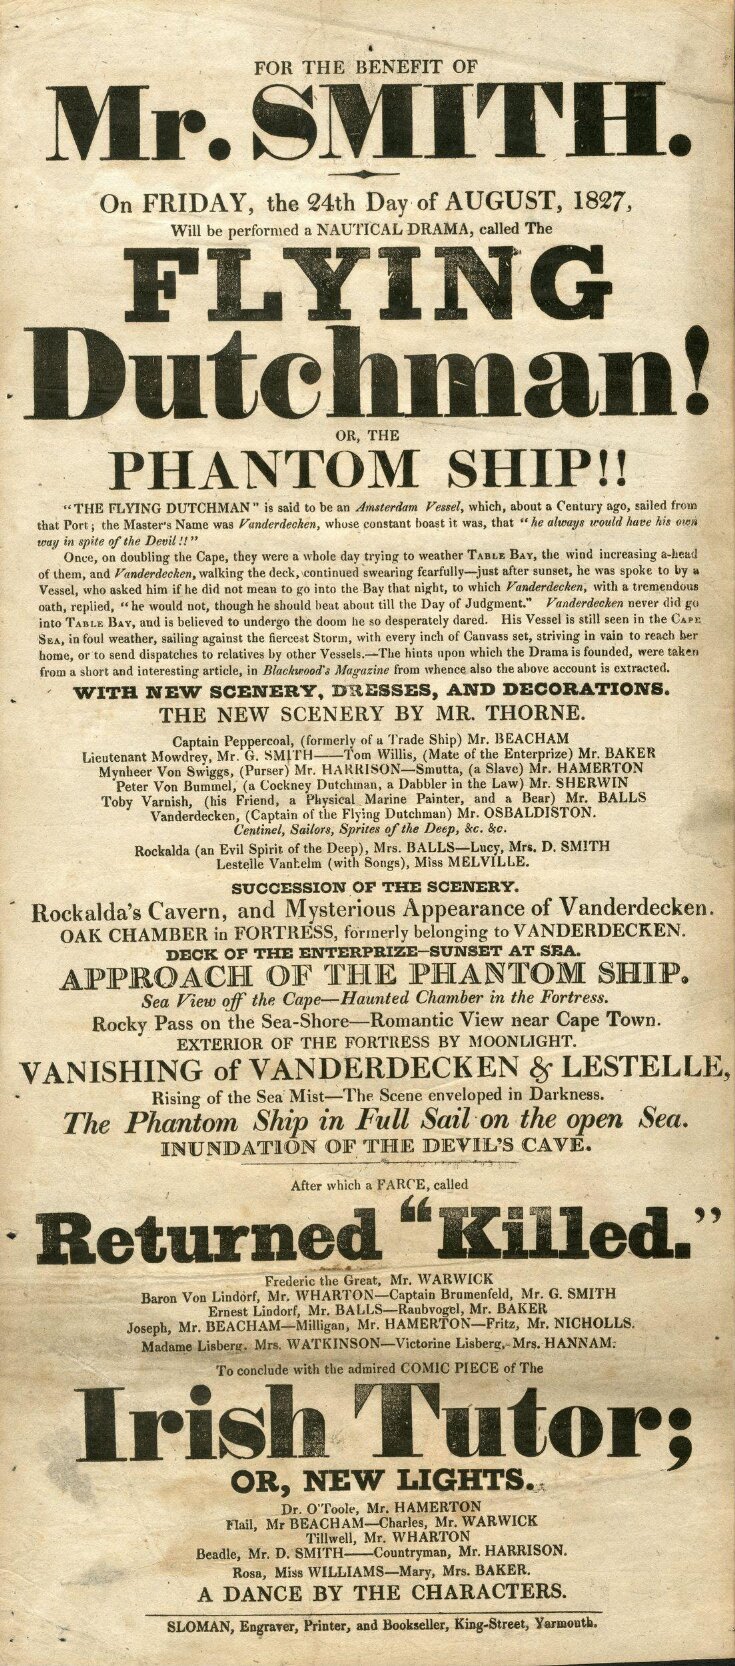 The Flying Dutchman!; or, the Phantom Ship!!, Returned "Killed", and The Irish Tutor; or, New Lights image